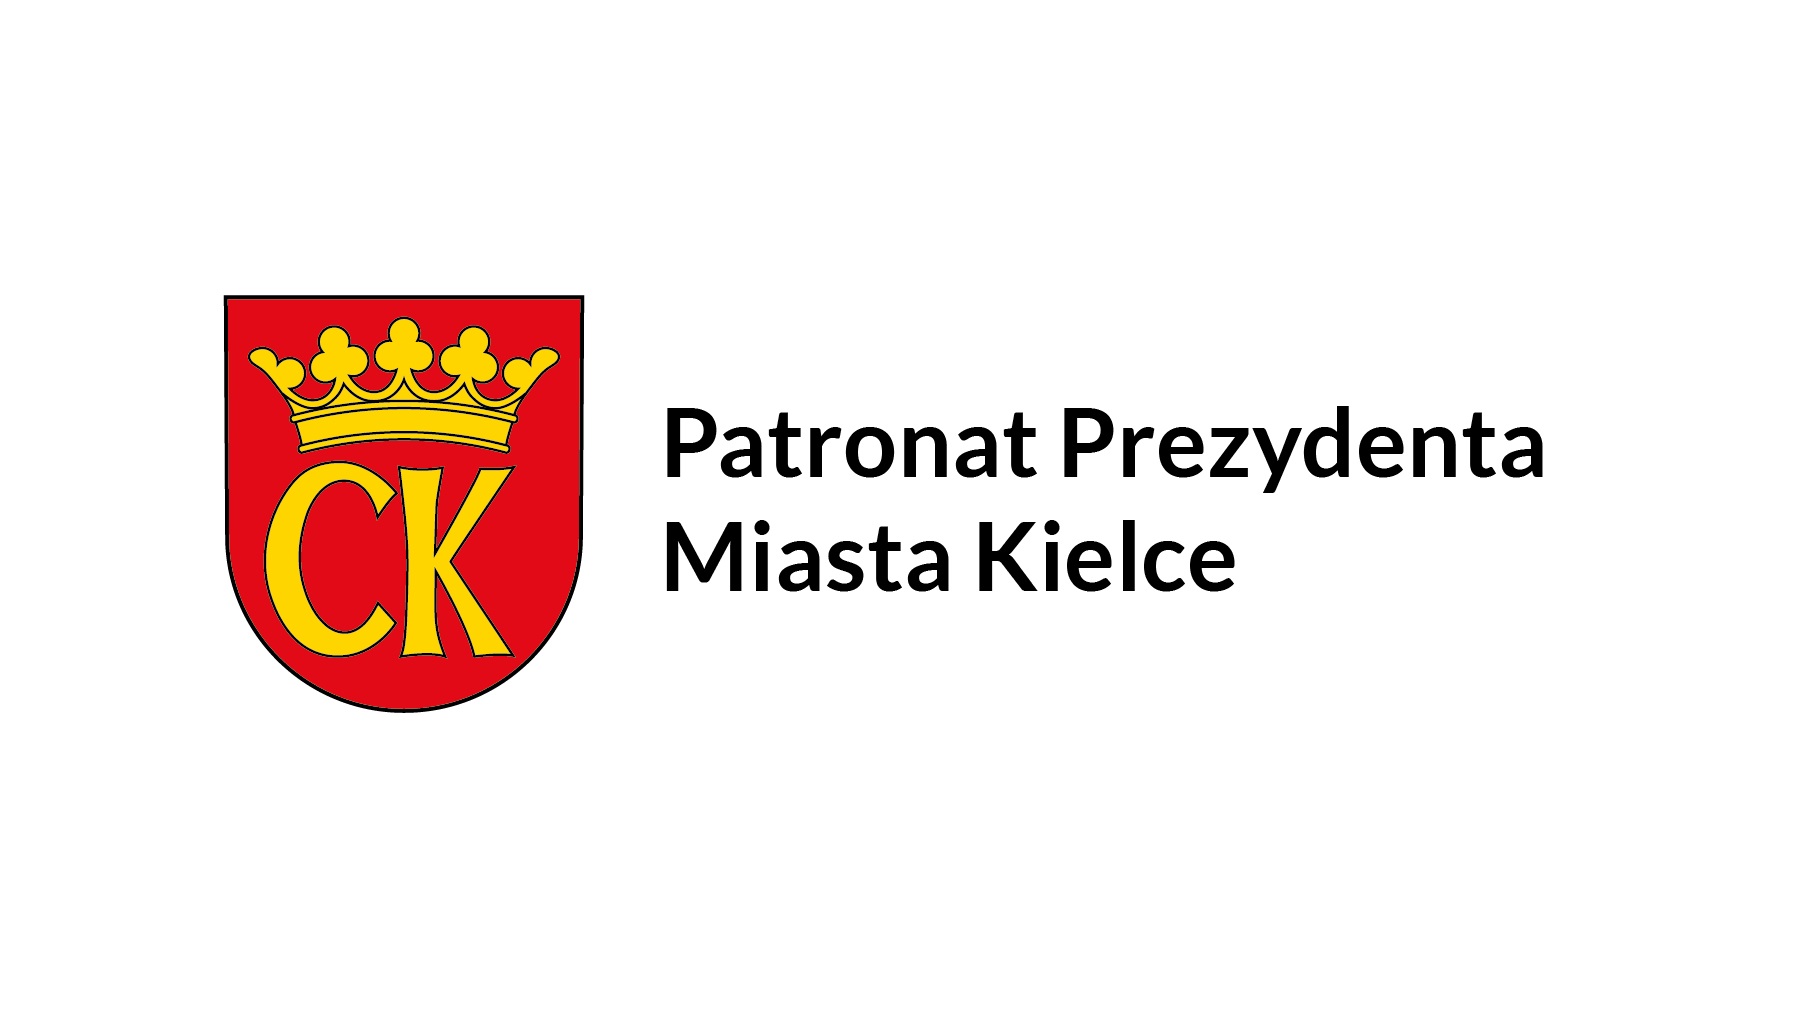 Honorary patronage of the President of Kielce over the Swietokrzyskie - a good nighborhood project